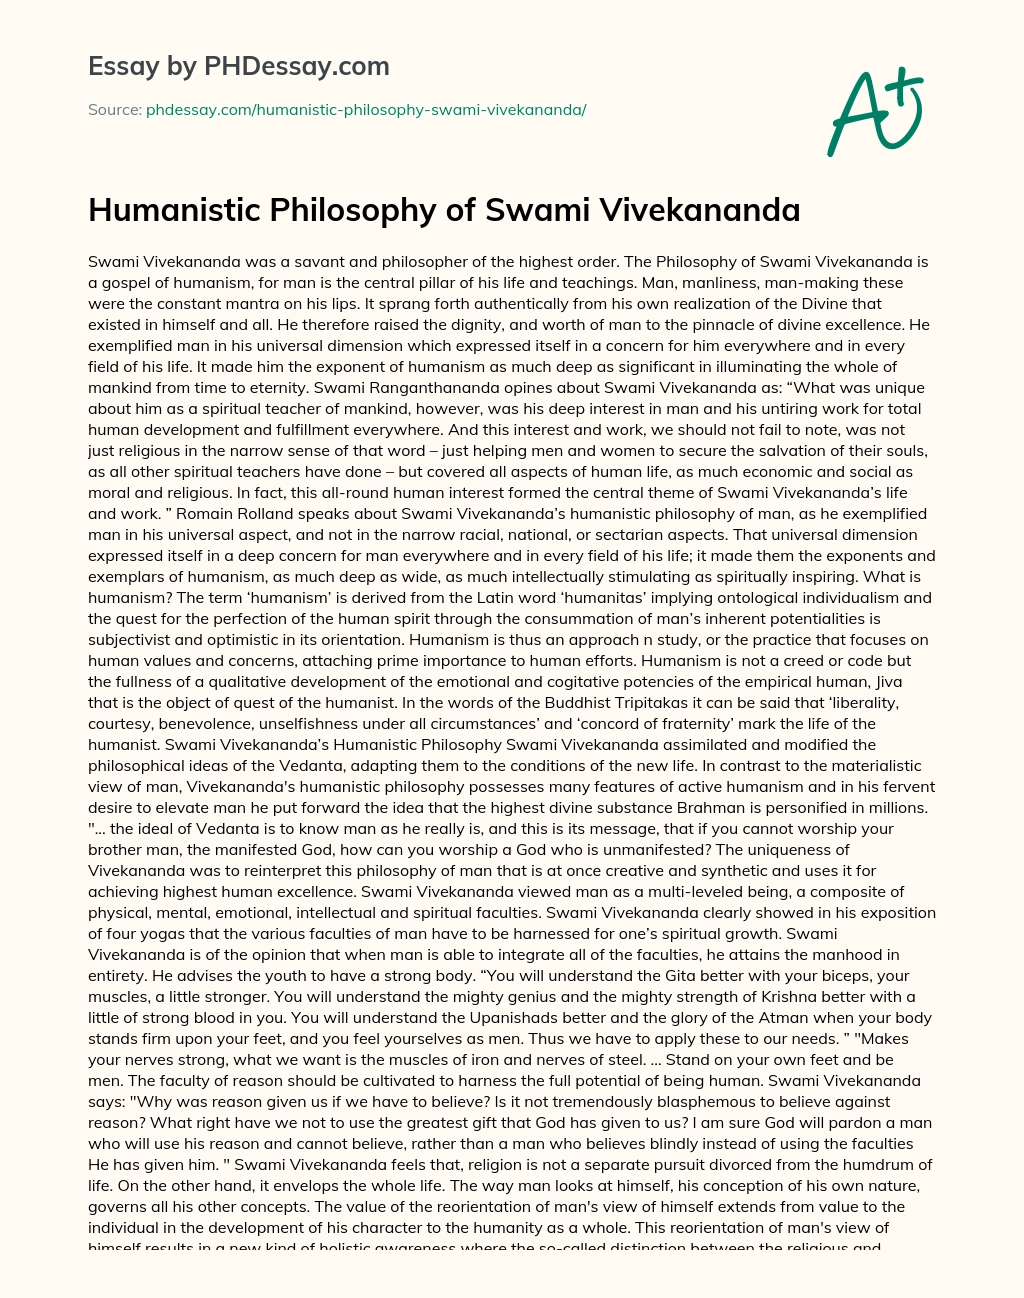 Humanistic Philosophy of Swami Vivekananda essay